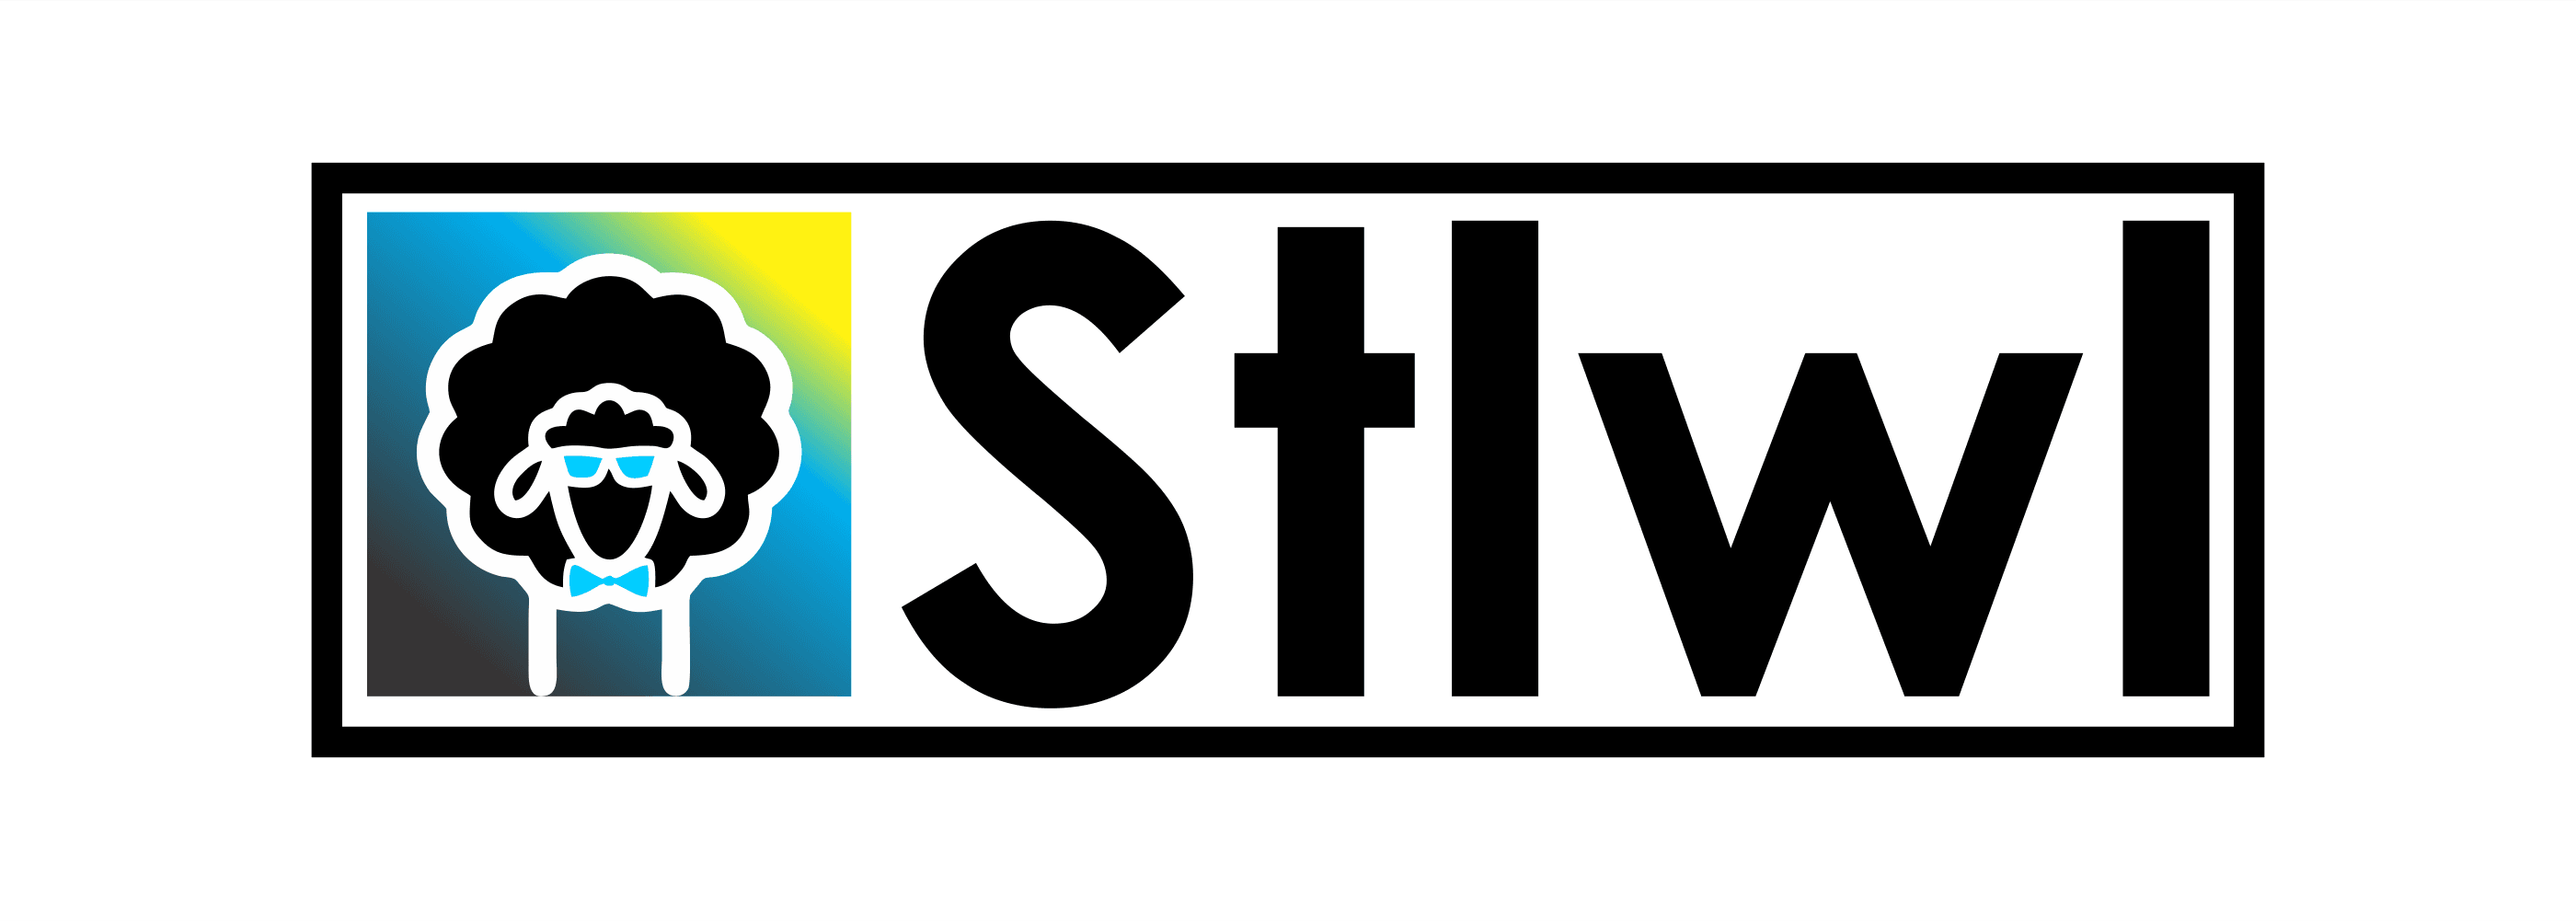 STLWL_Creative-Colab banner